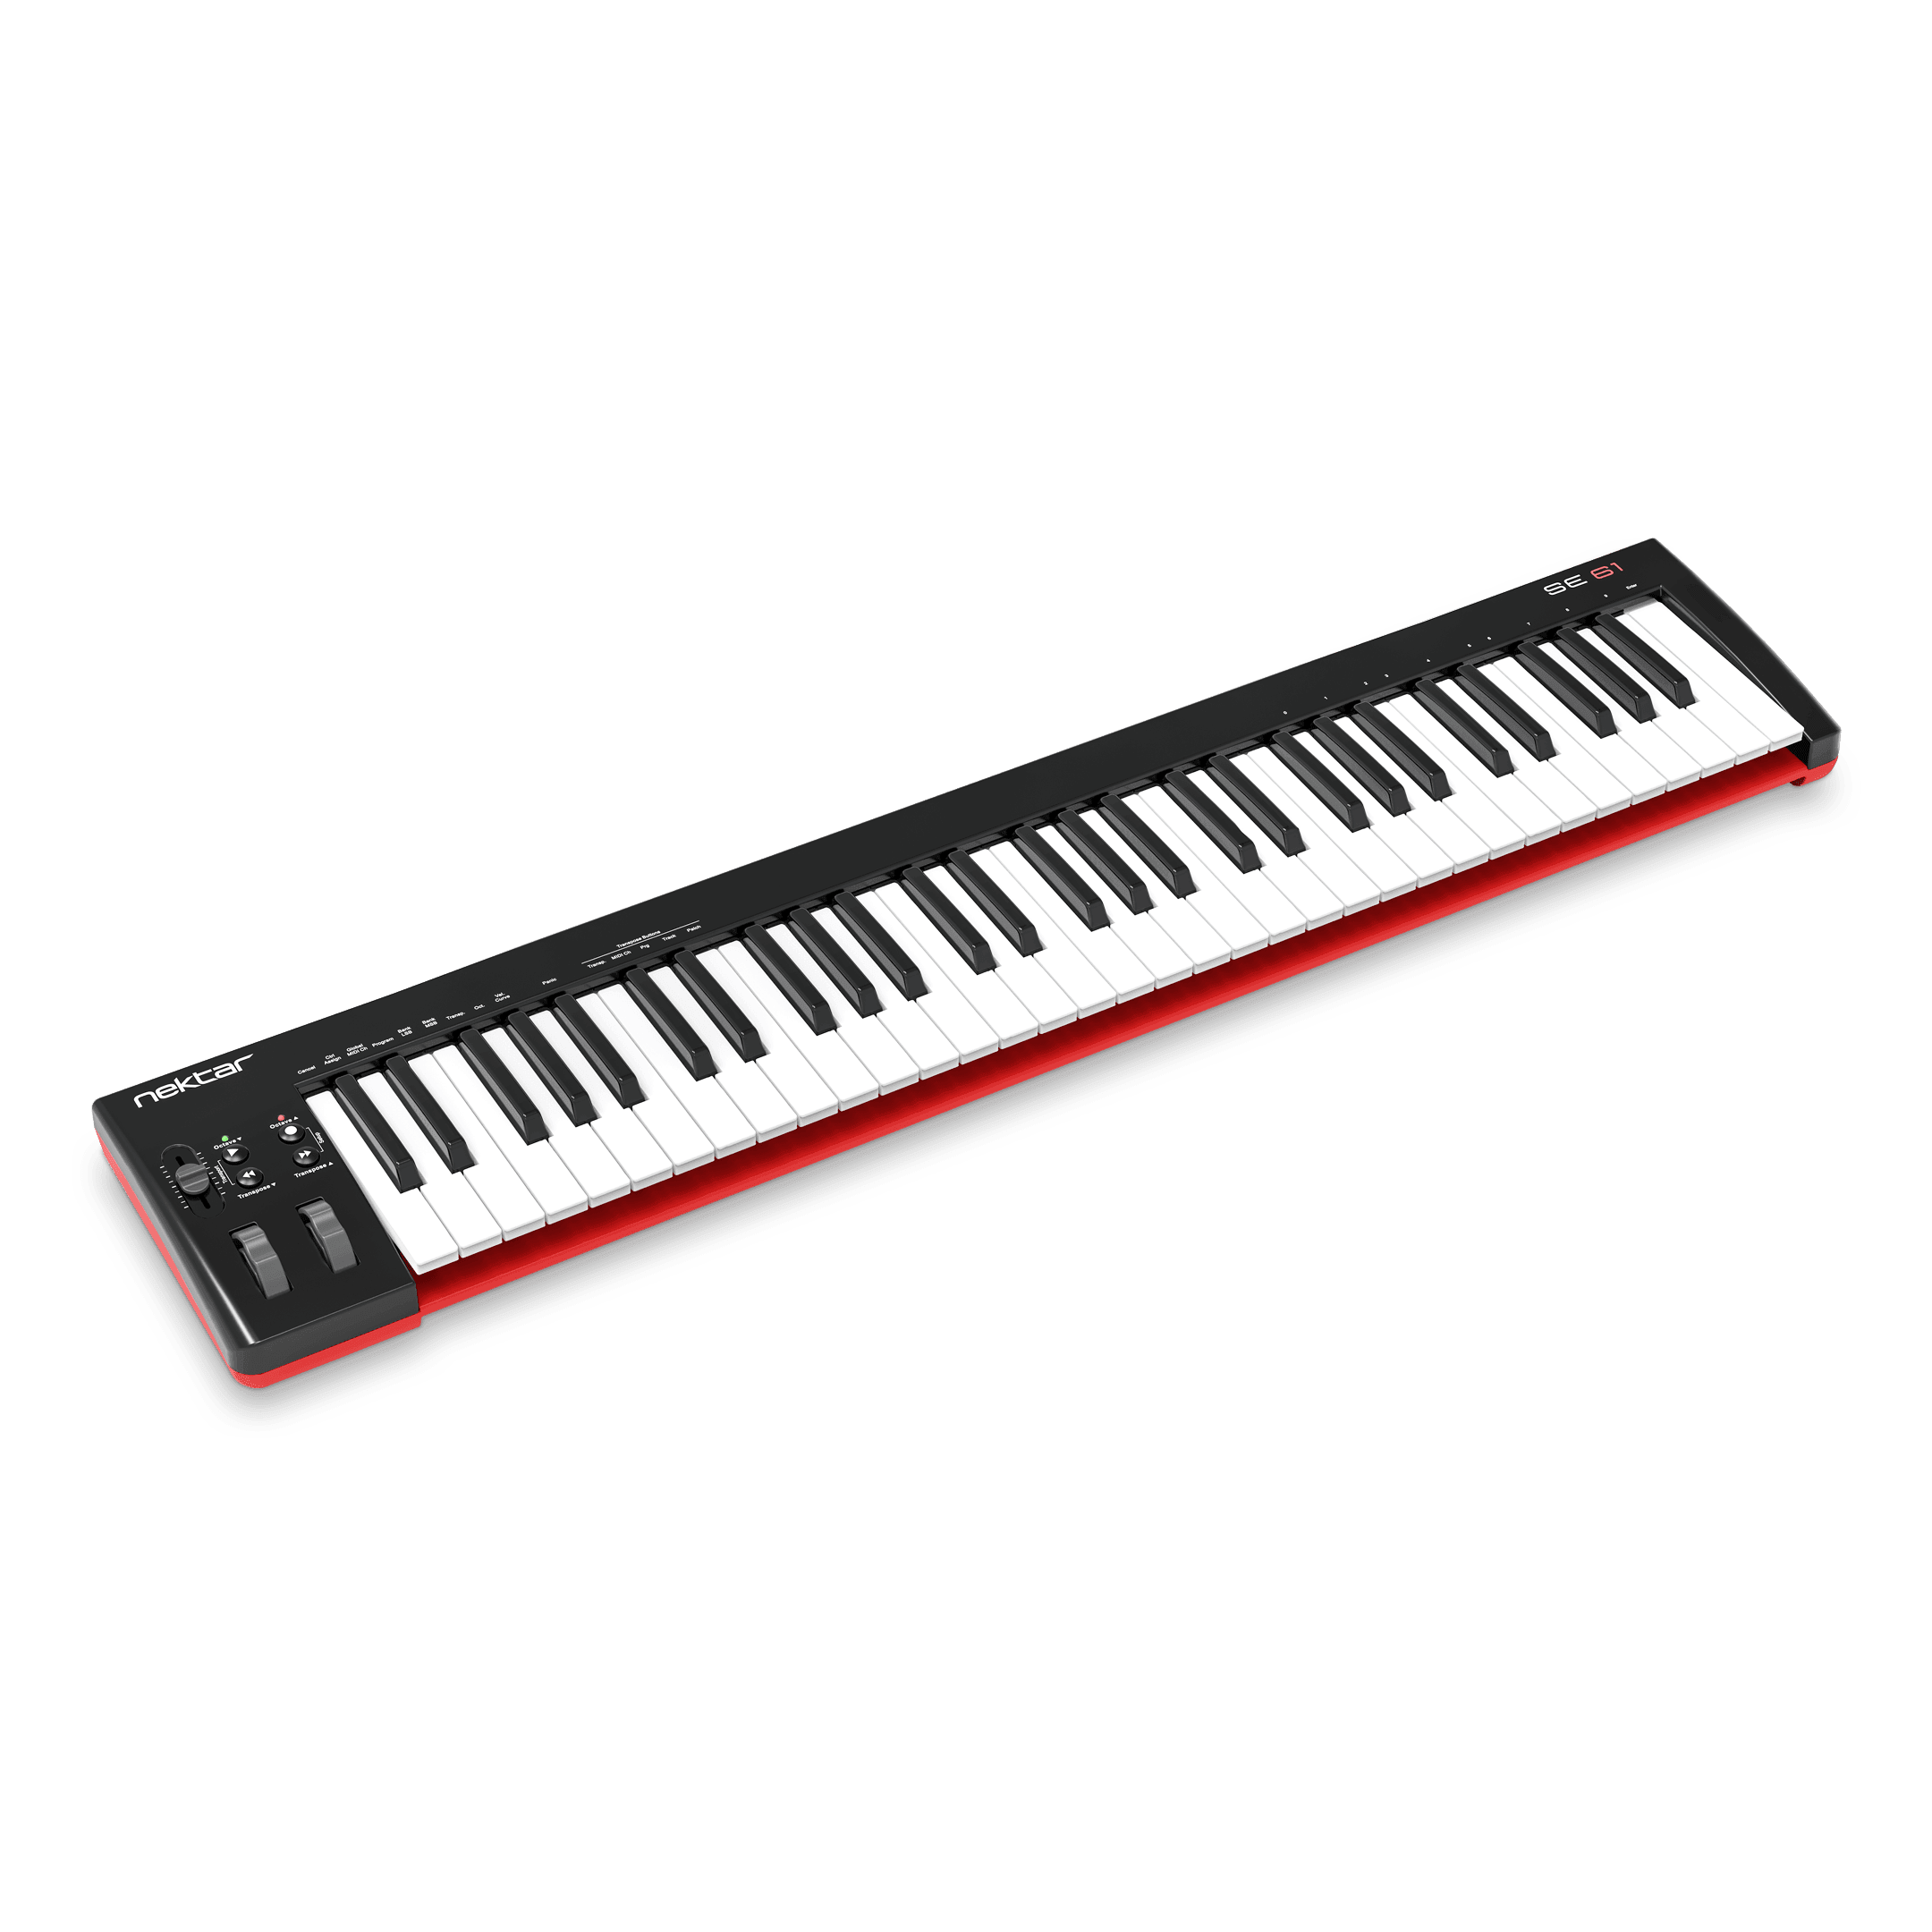 Nektar SE61 Entry Level 61-note Velocity Sensitive Full Size Keys USB MIDI DAW Controller Keyboard - Live & Recording - Midi Controllers by Nektar at Muso's Stuff